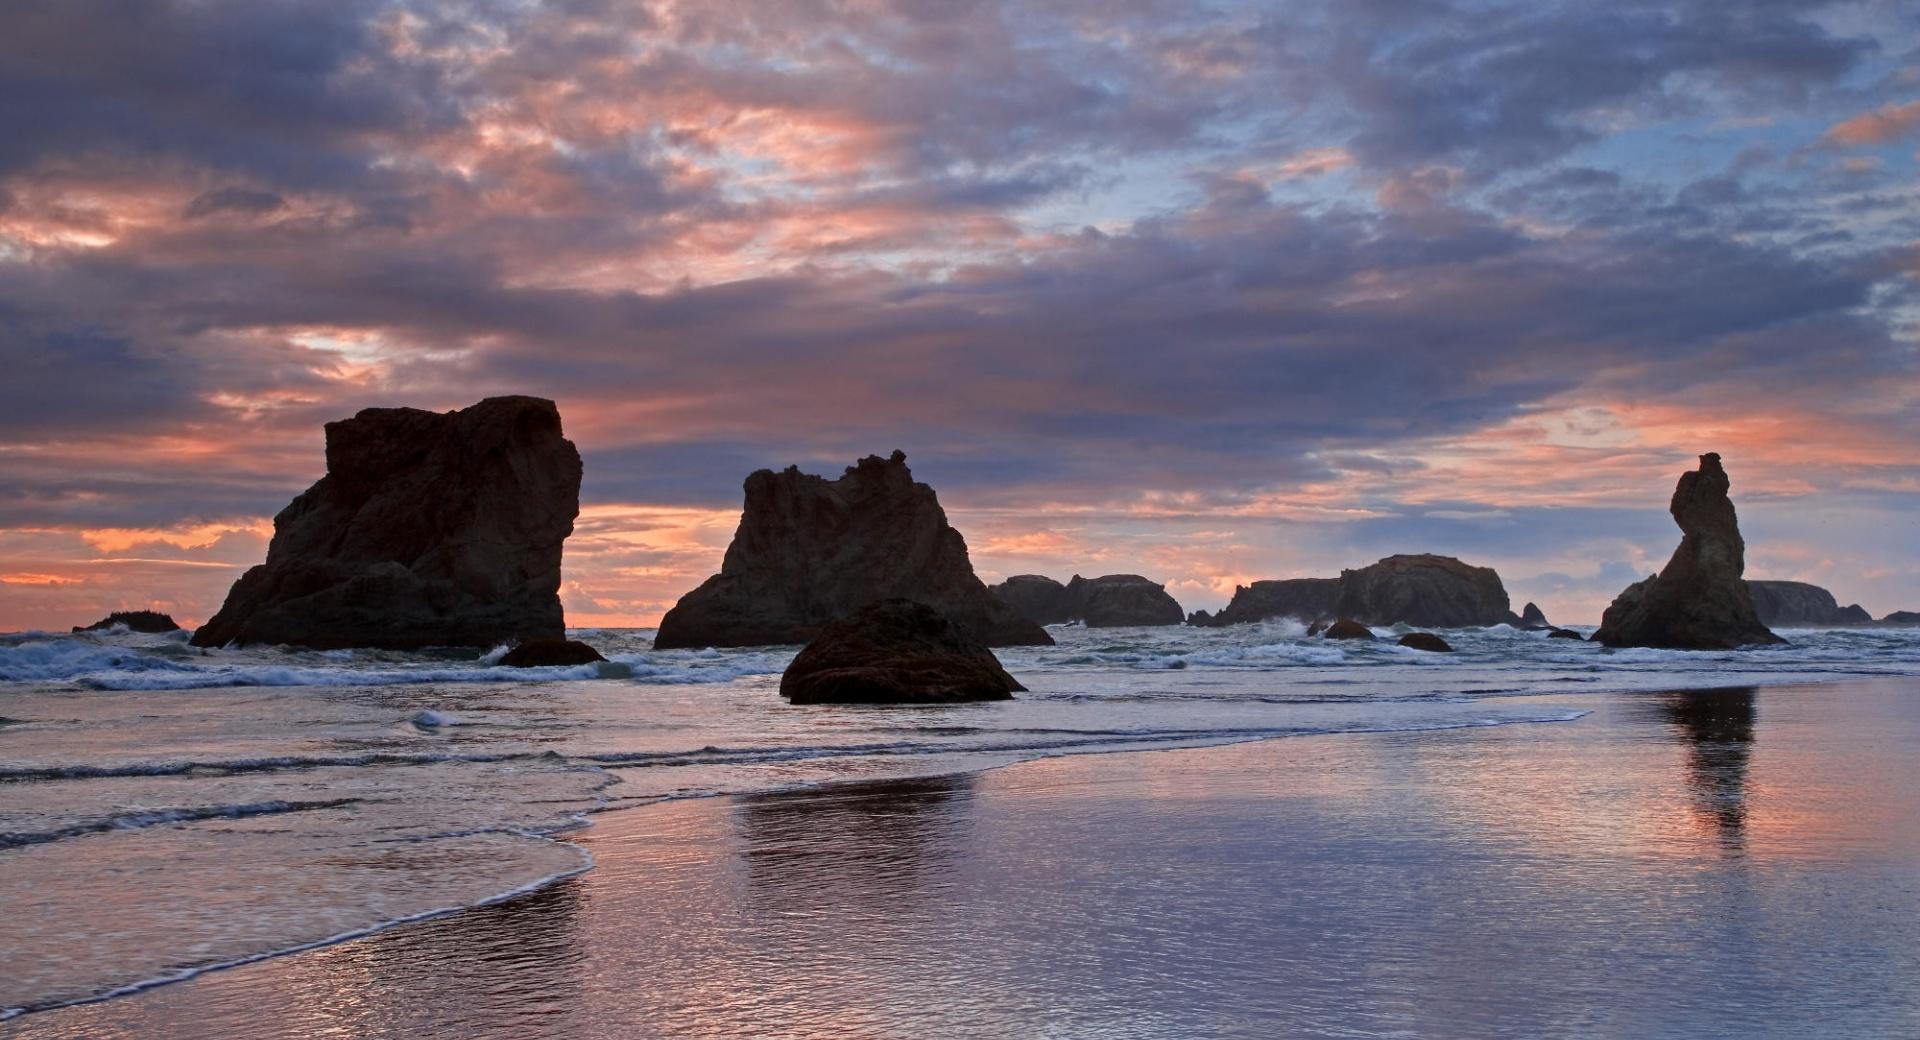 Sea Stacks At Sunset Bandon Oregon at 1334 x 750 iPhone 7 size wallpapers HD quality